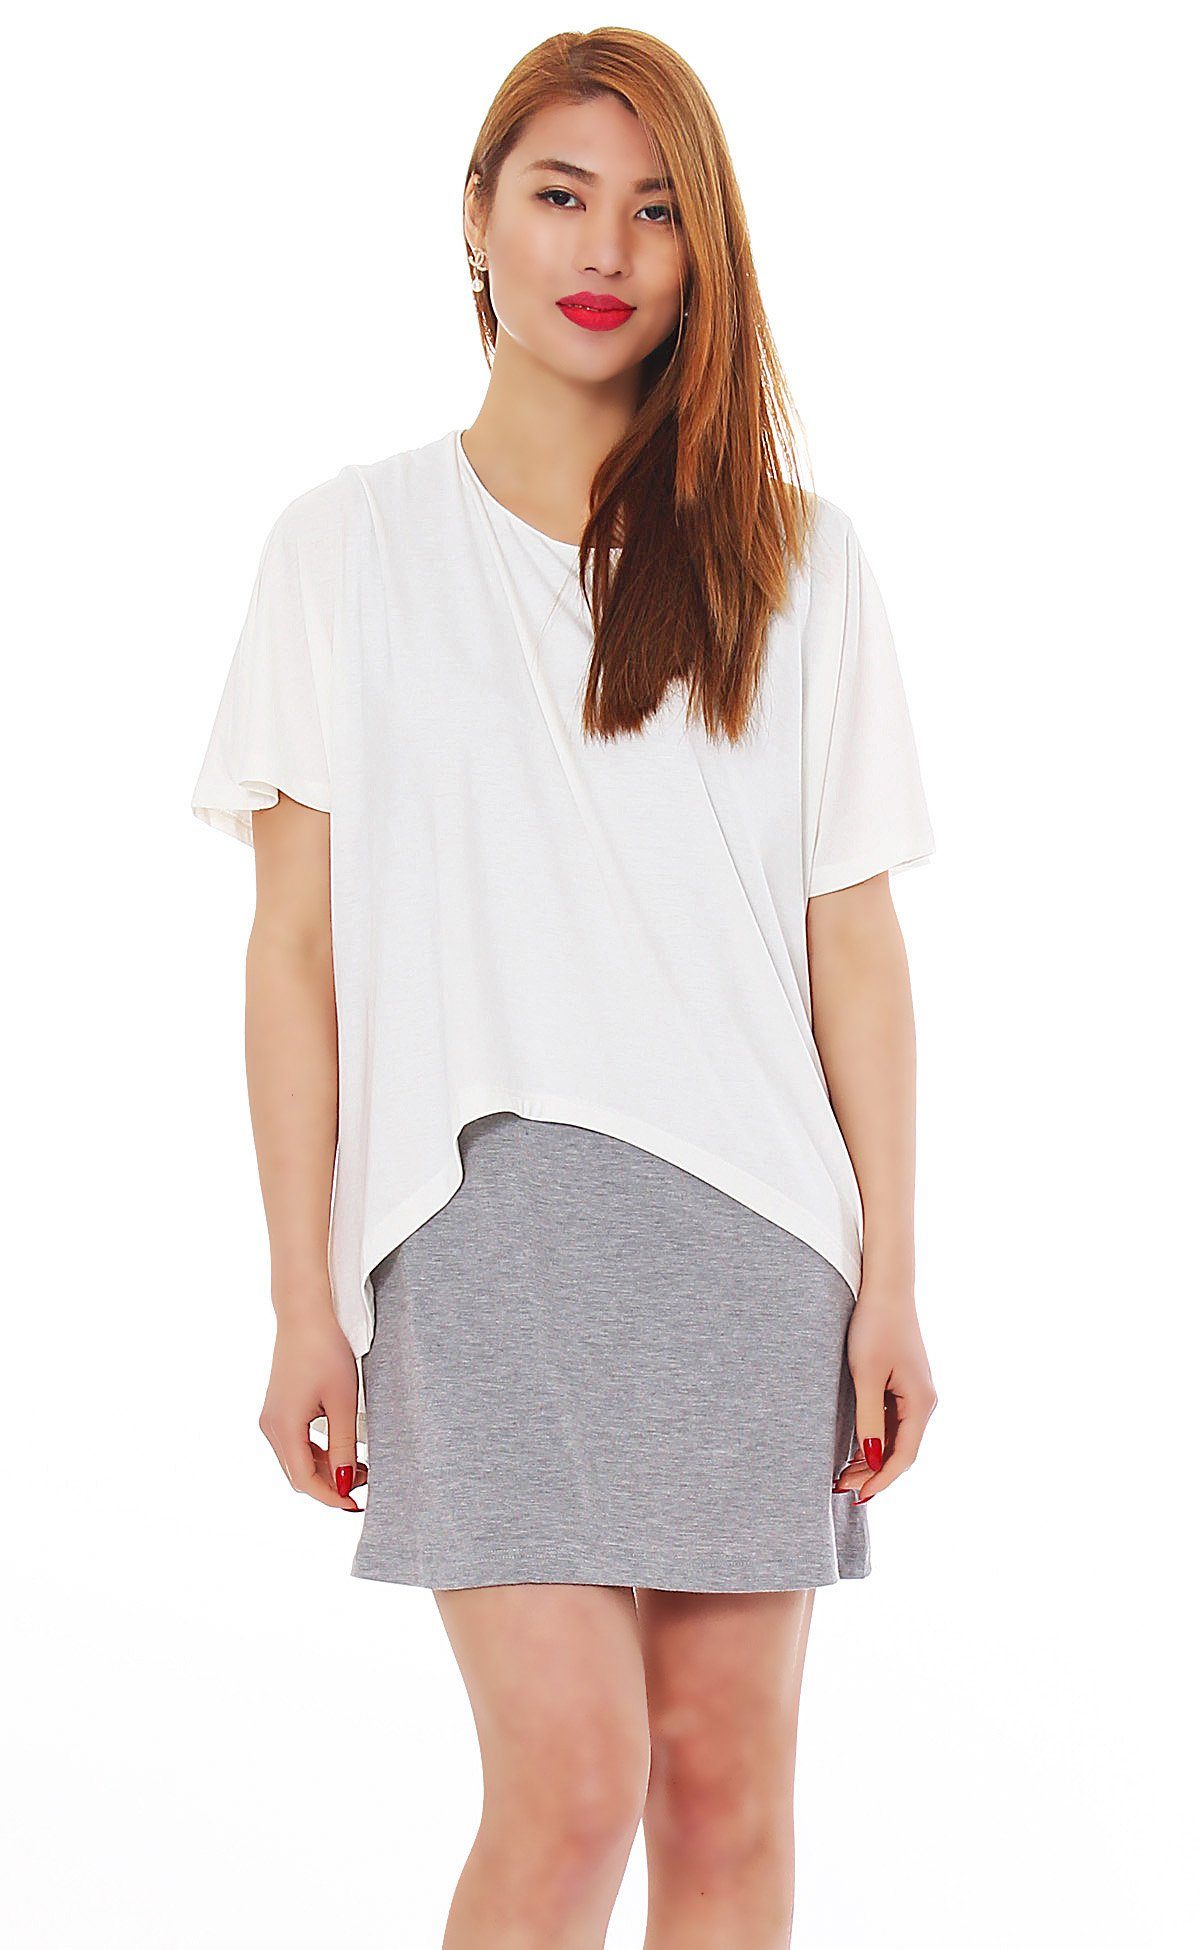 Mississhop Damen Oberteil T-Shirt Grau 2-in-1-Shirt Kurzarmshirt Longshirt Kreme Kleid / Bluse